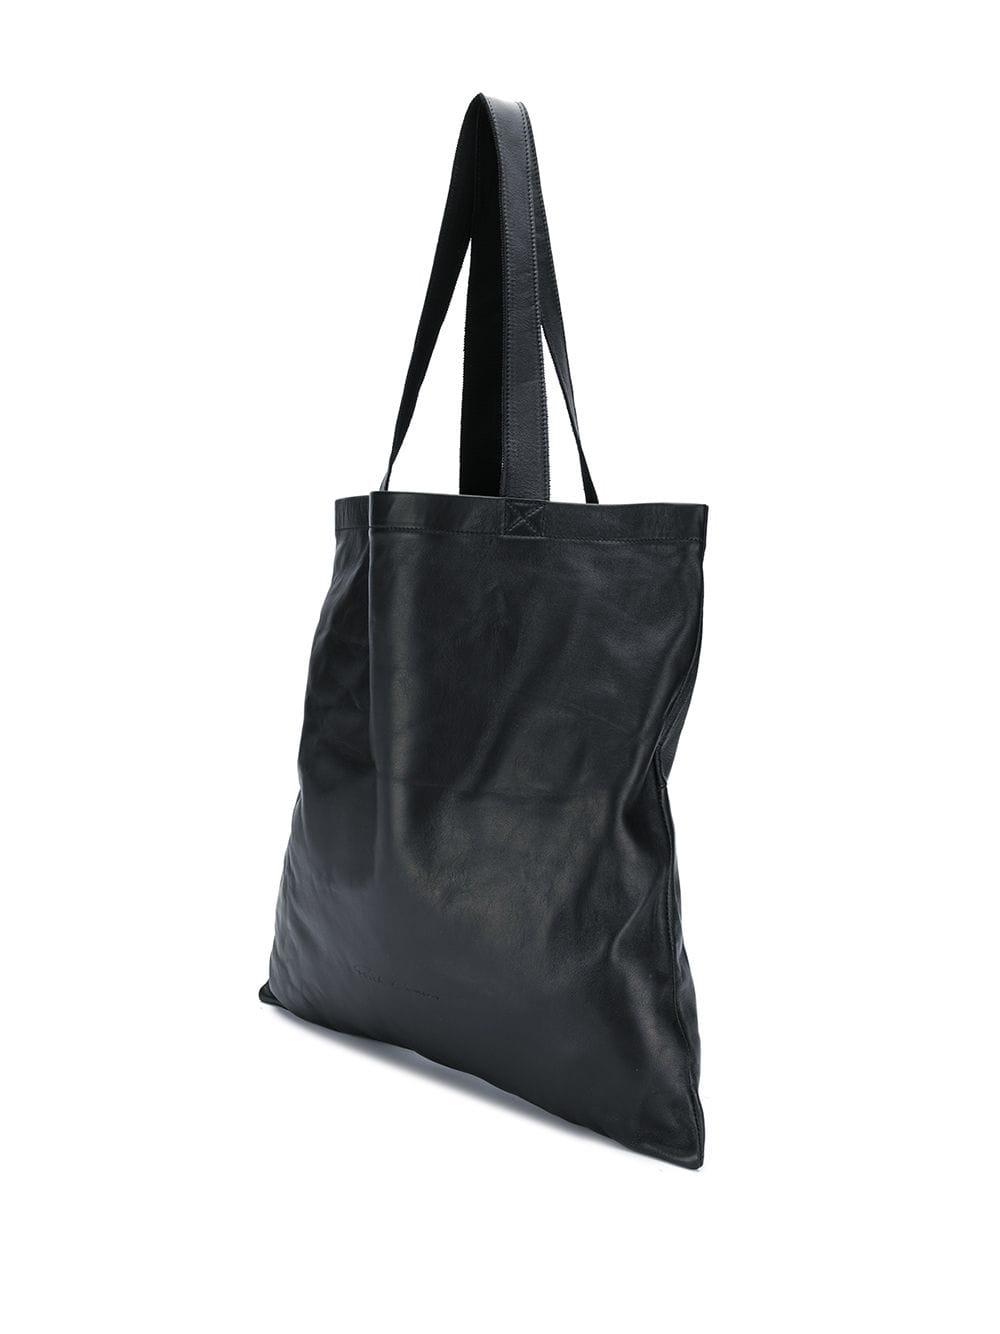 Lyst - Rick Owens Babel Large Signature Tote Bag in Black for Men